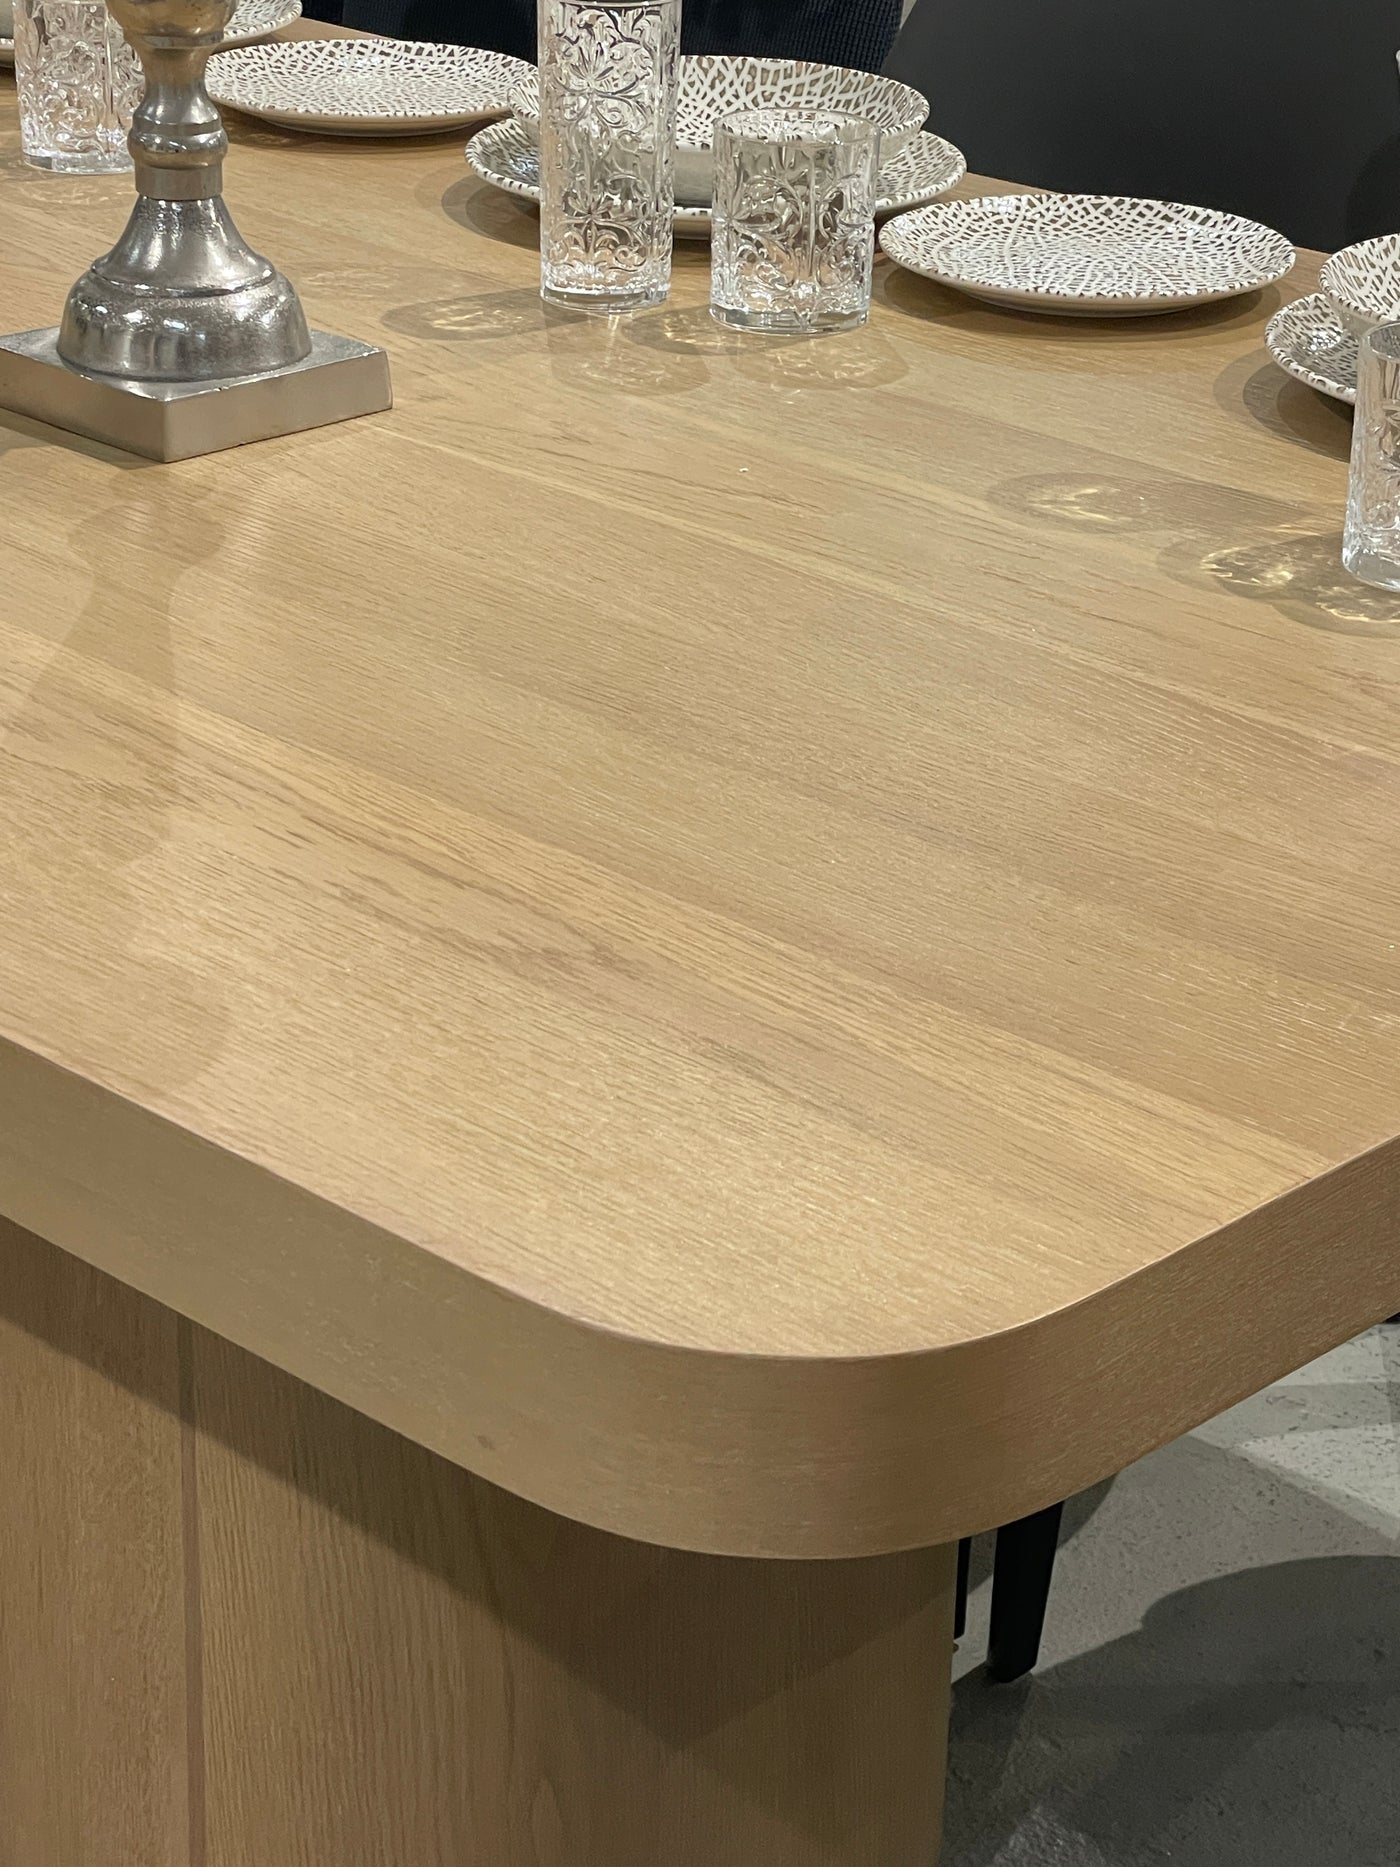 Colonna Dining Table Light Oak - 2.4m - Future Classics Furniture